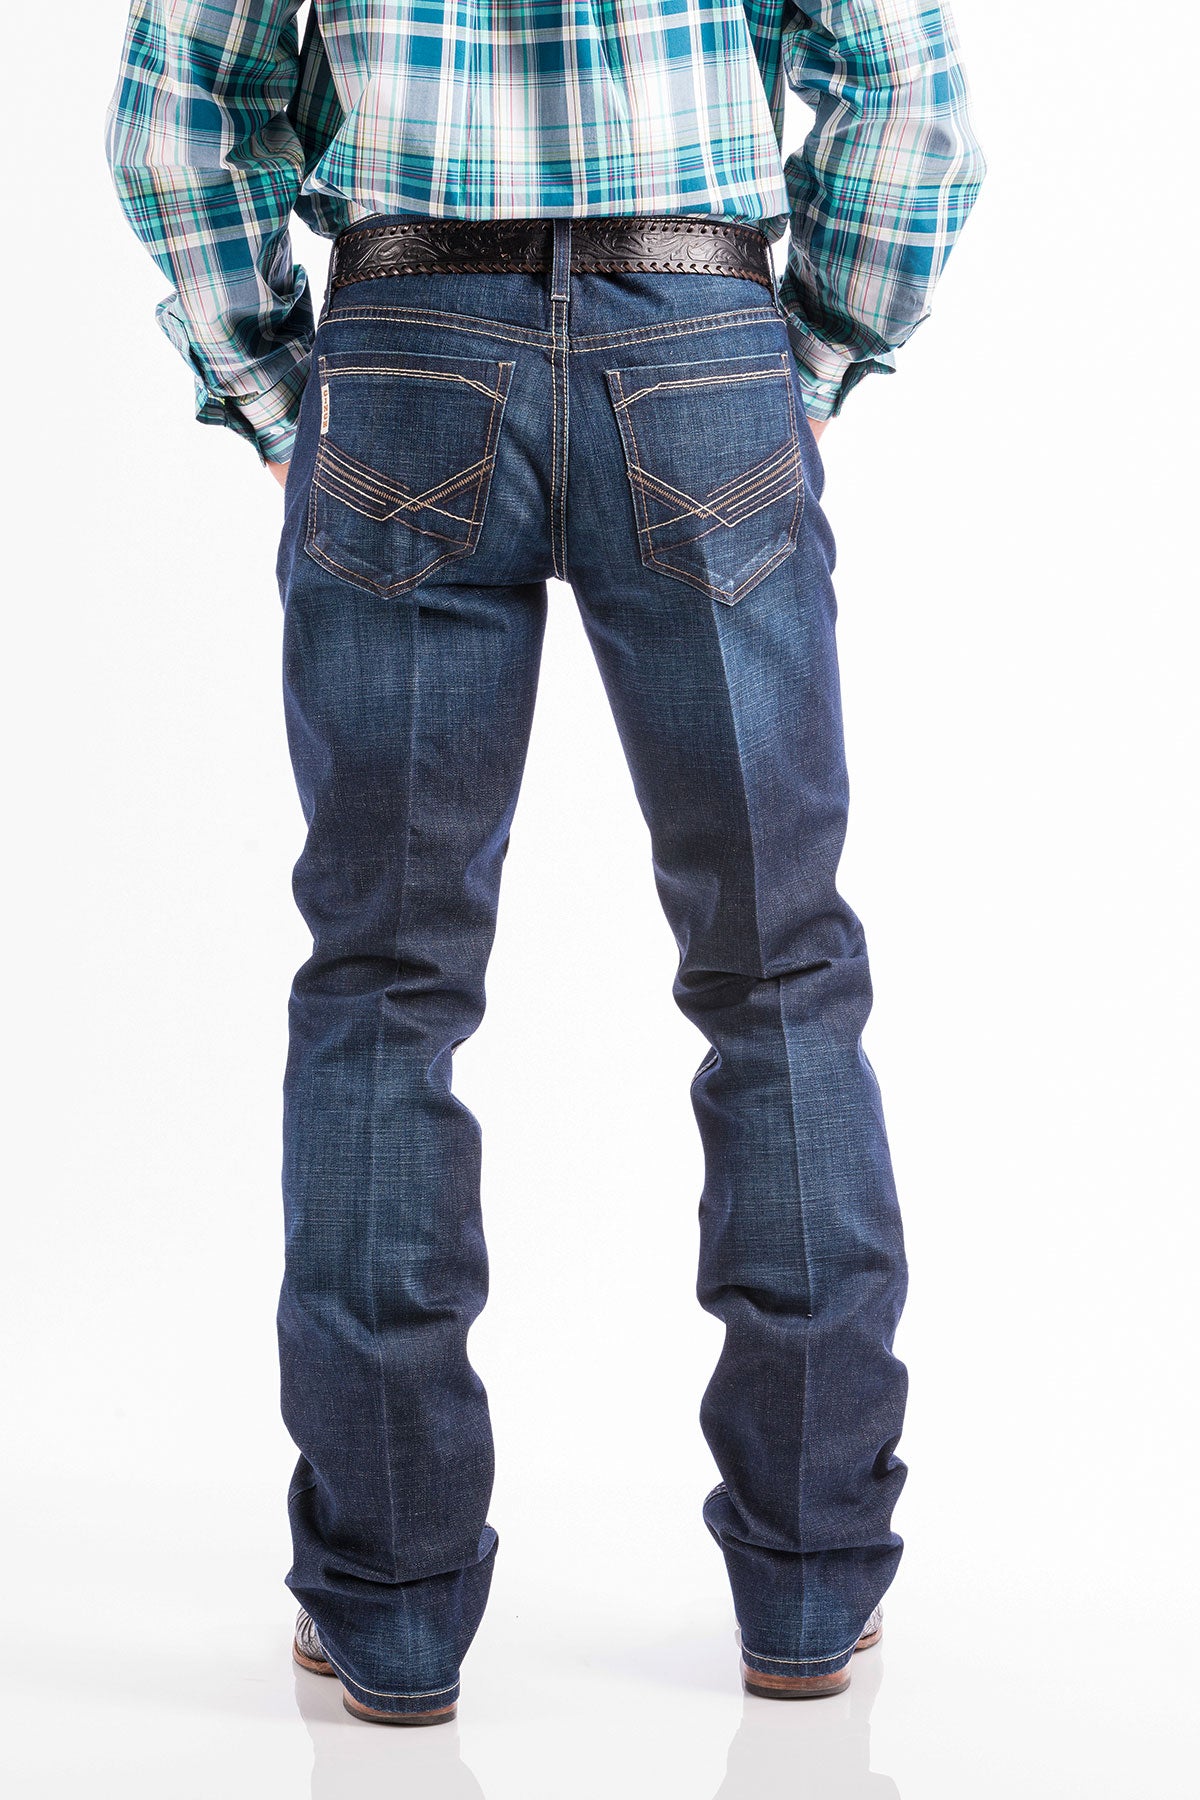 cinch ian slim fit bootcut jeans